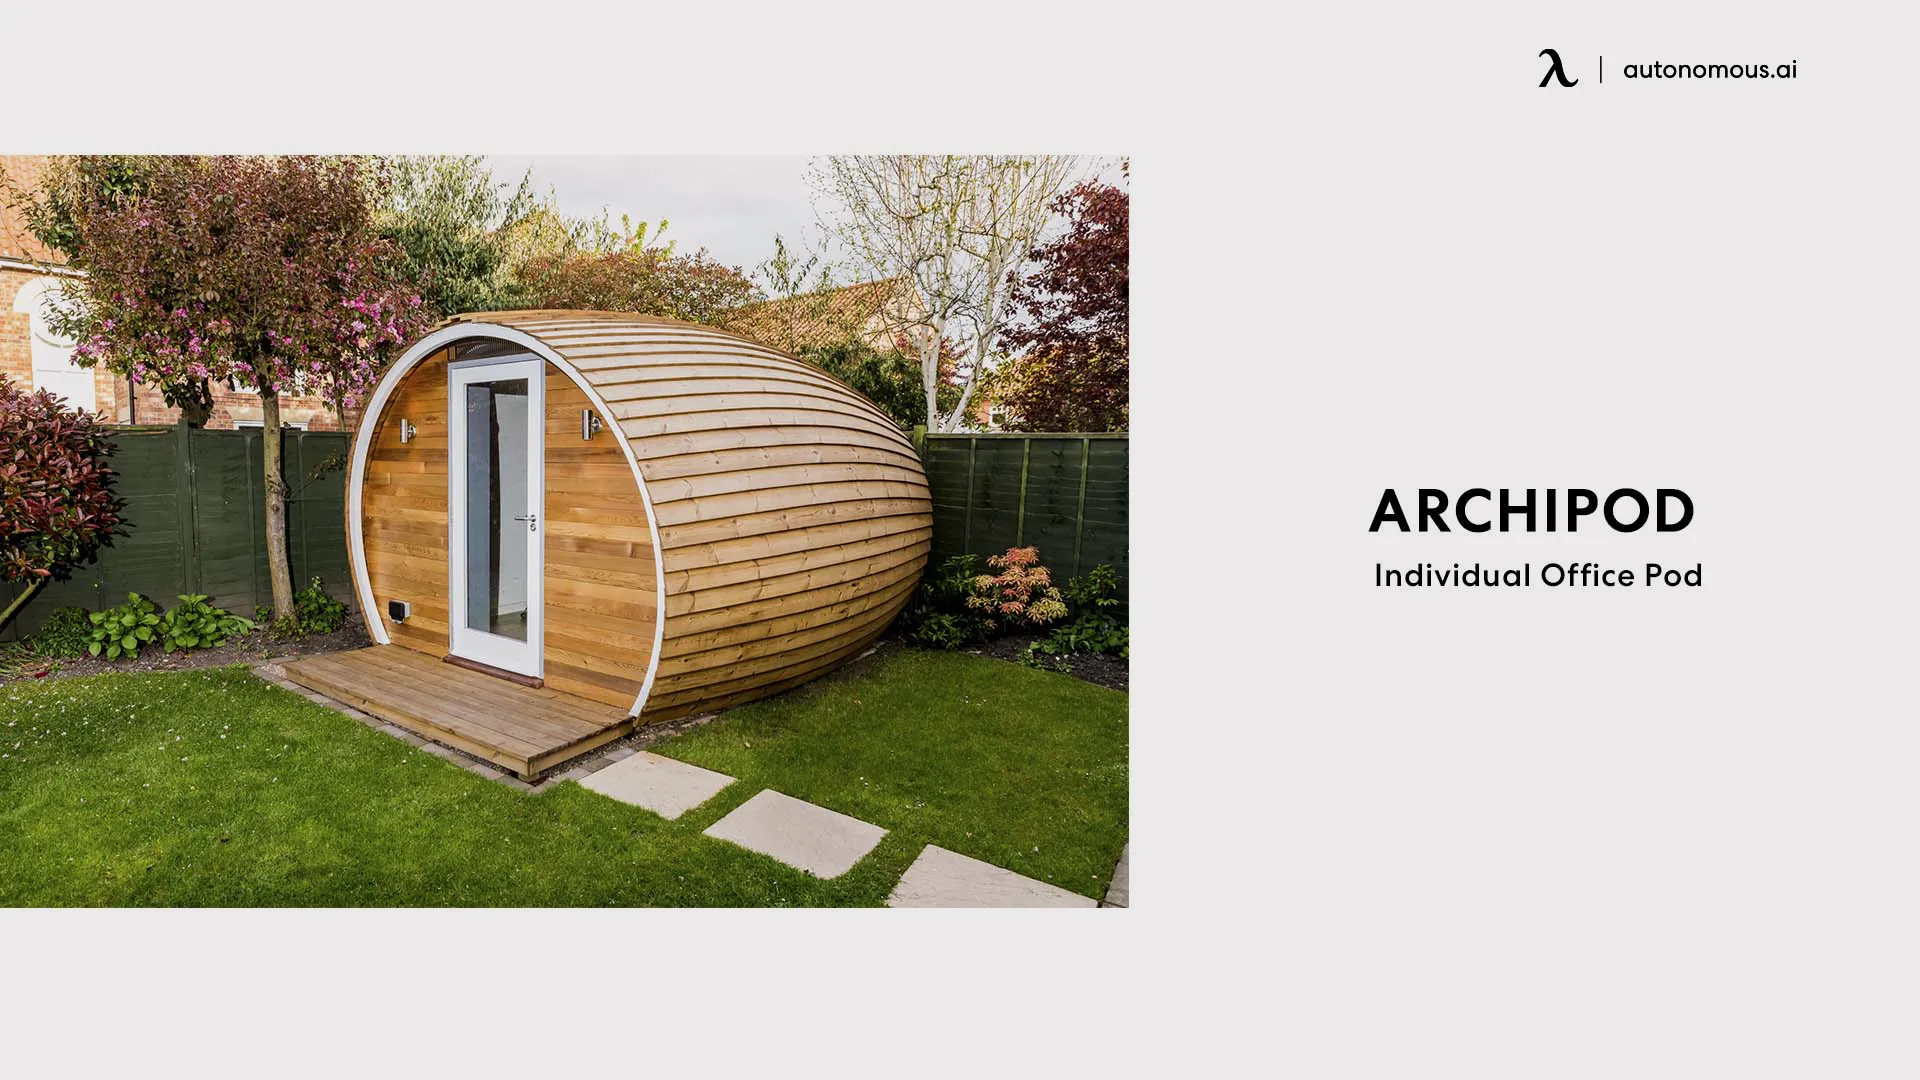 ArchiPod small camping pod